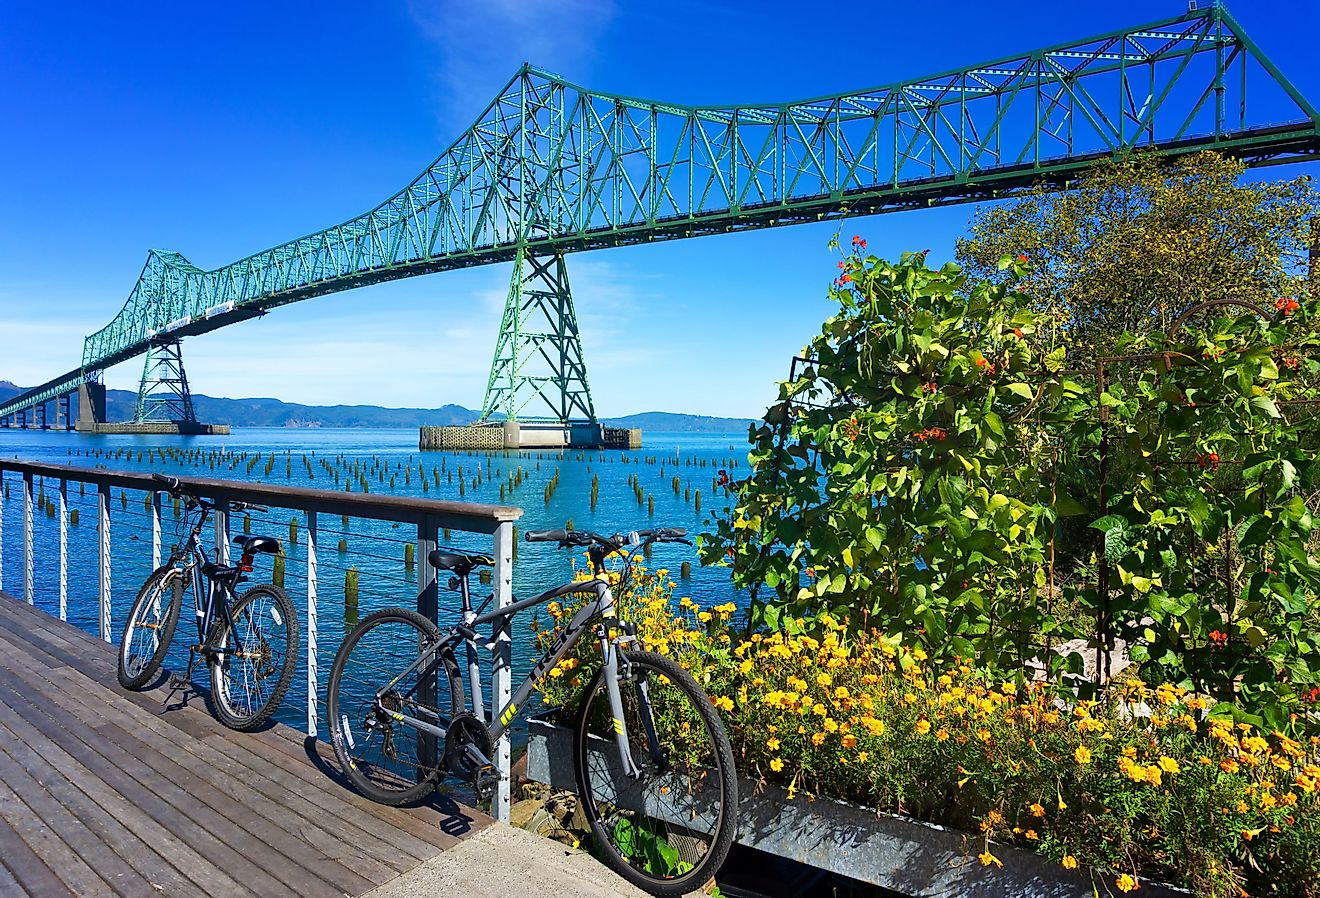 Astoria Megler Bridge with bicycles in the foreground in Astoria, Oregon. Image credit Jess Kraft via Shutterstock